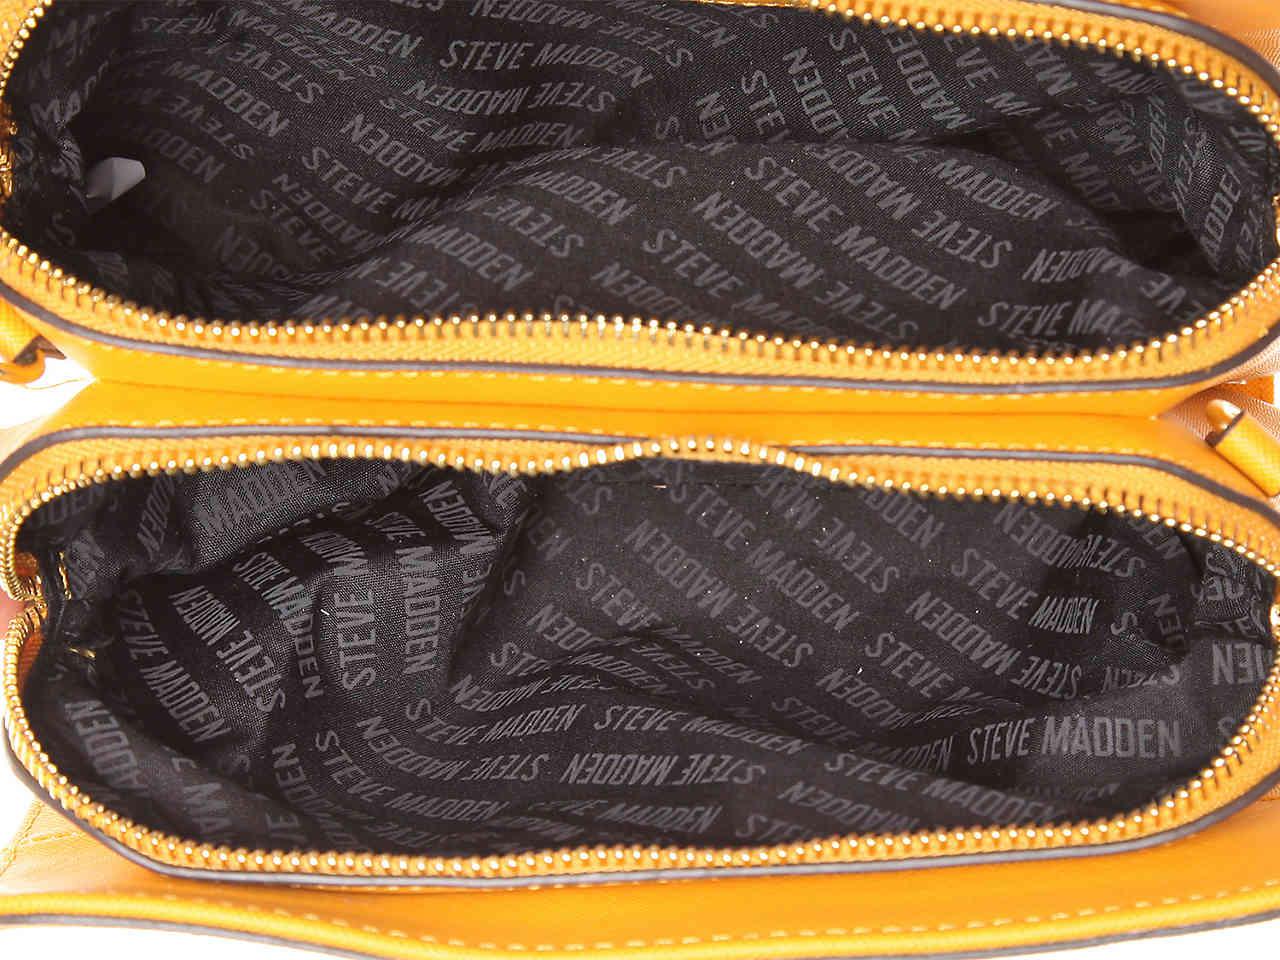 Steve Madden Blannis Crossbody Bag in Mustard Yellow (Yellow) - Lyst